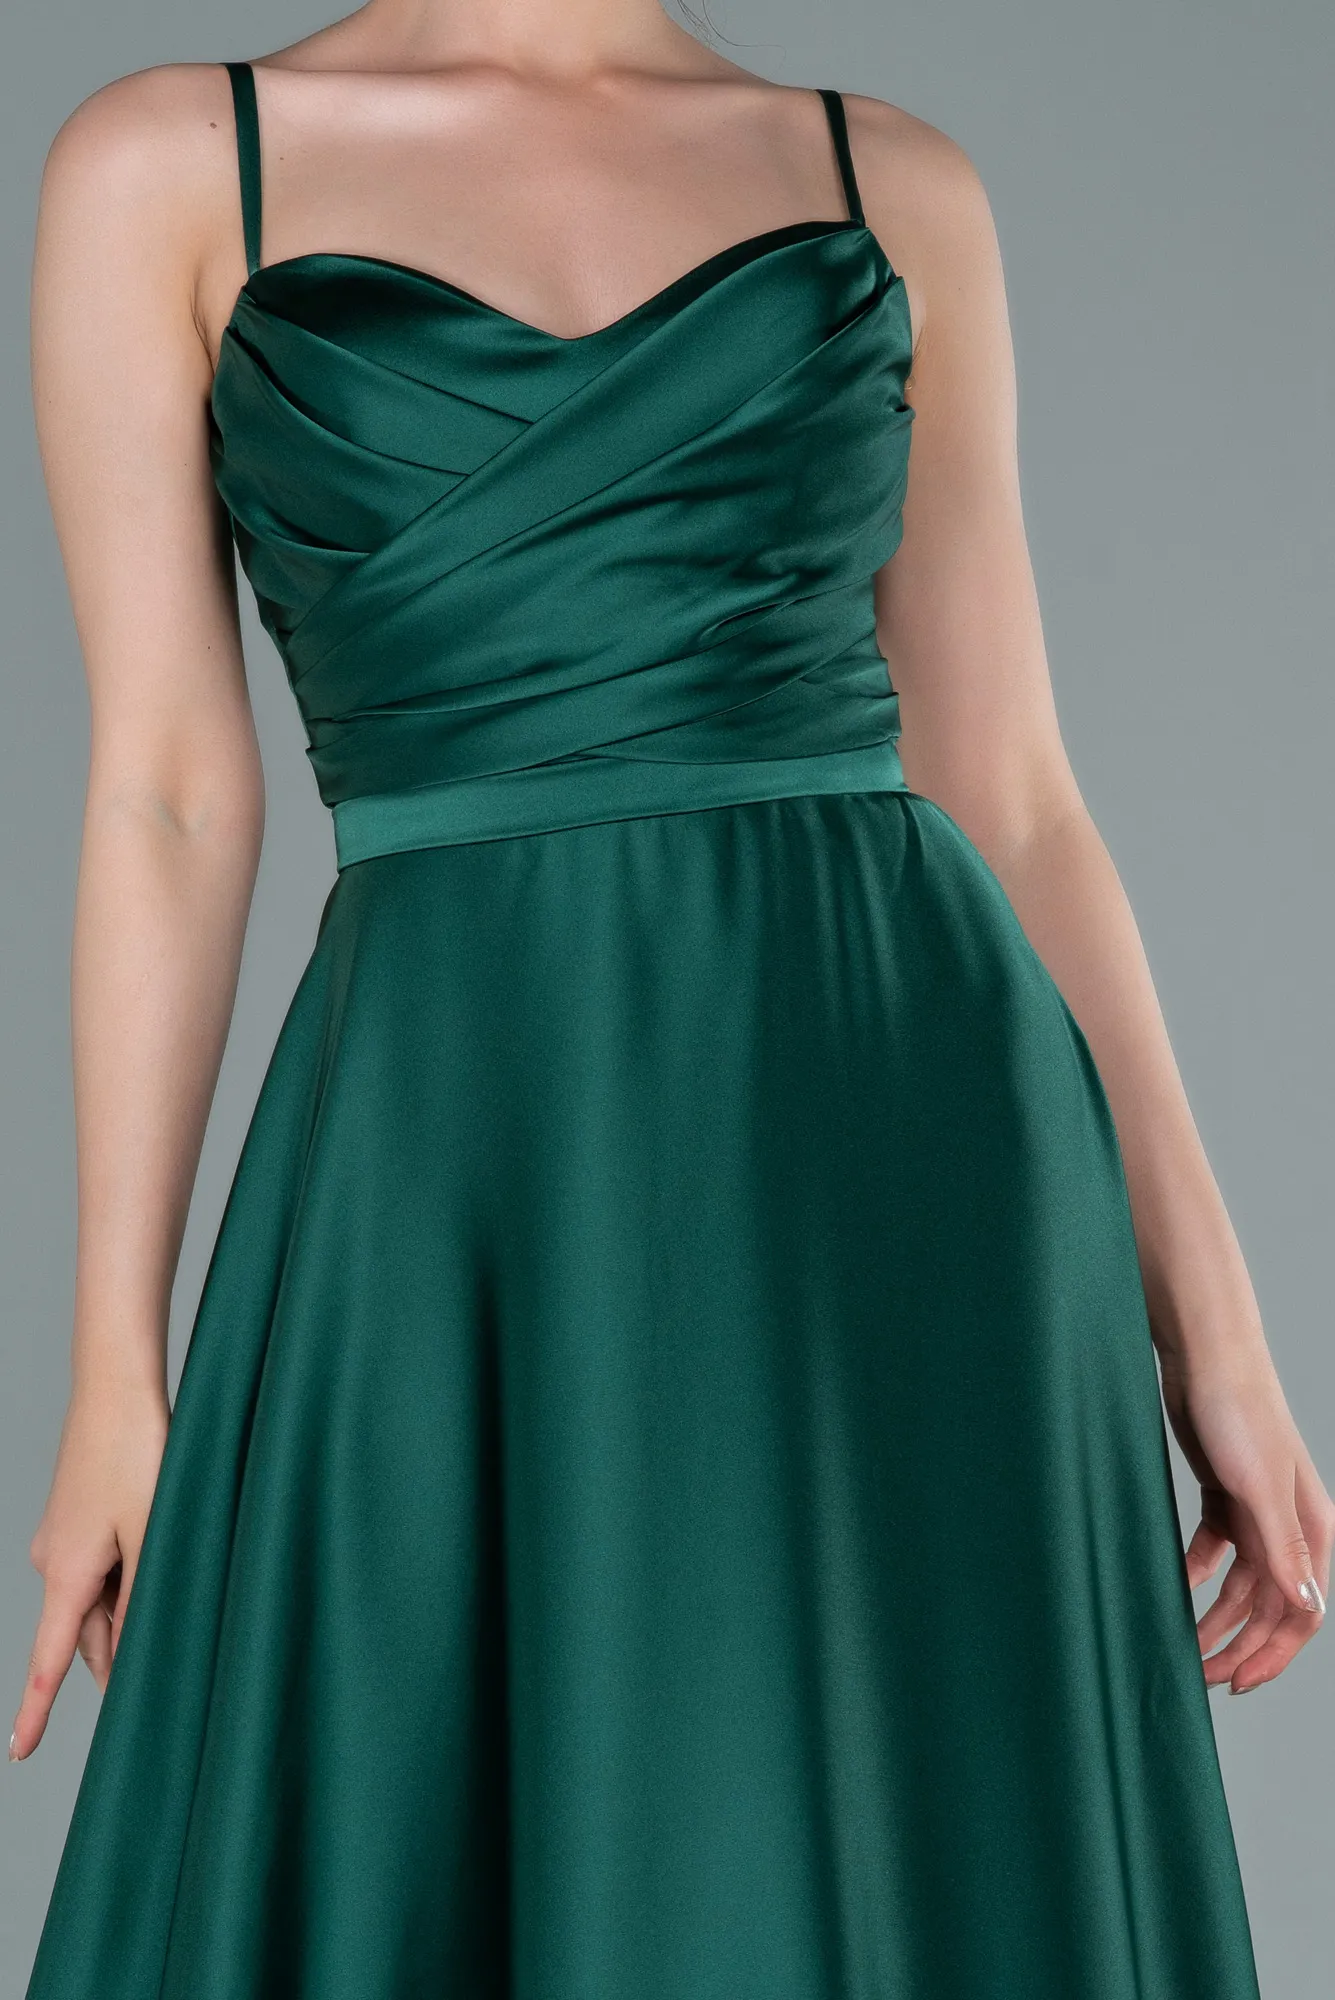 Green-Long Satin Evening Dress ABU1601